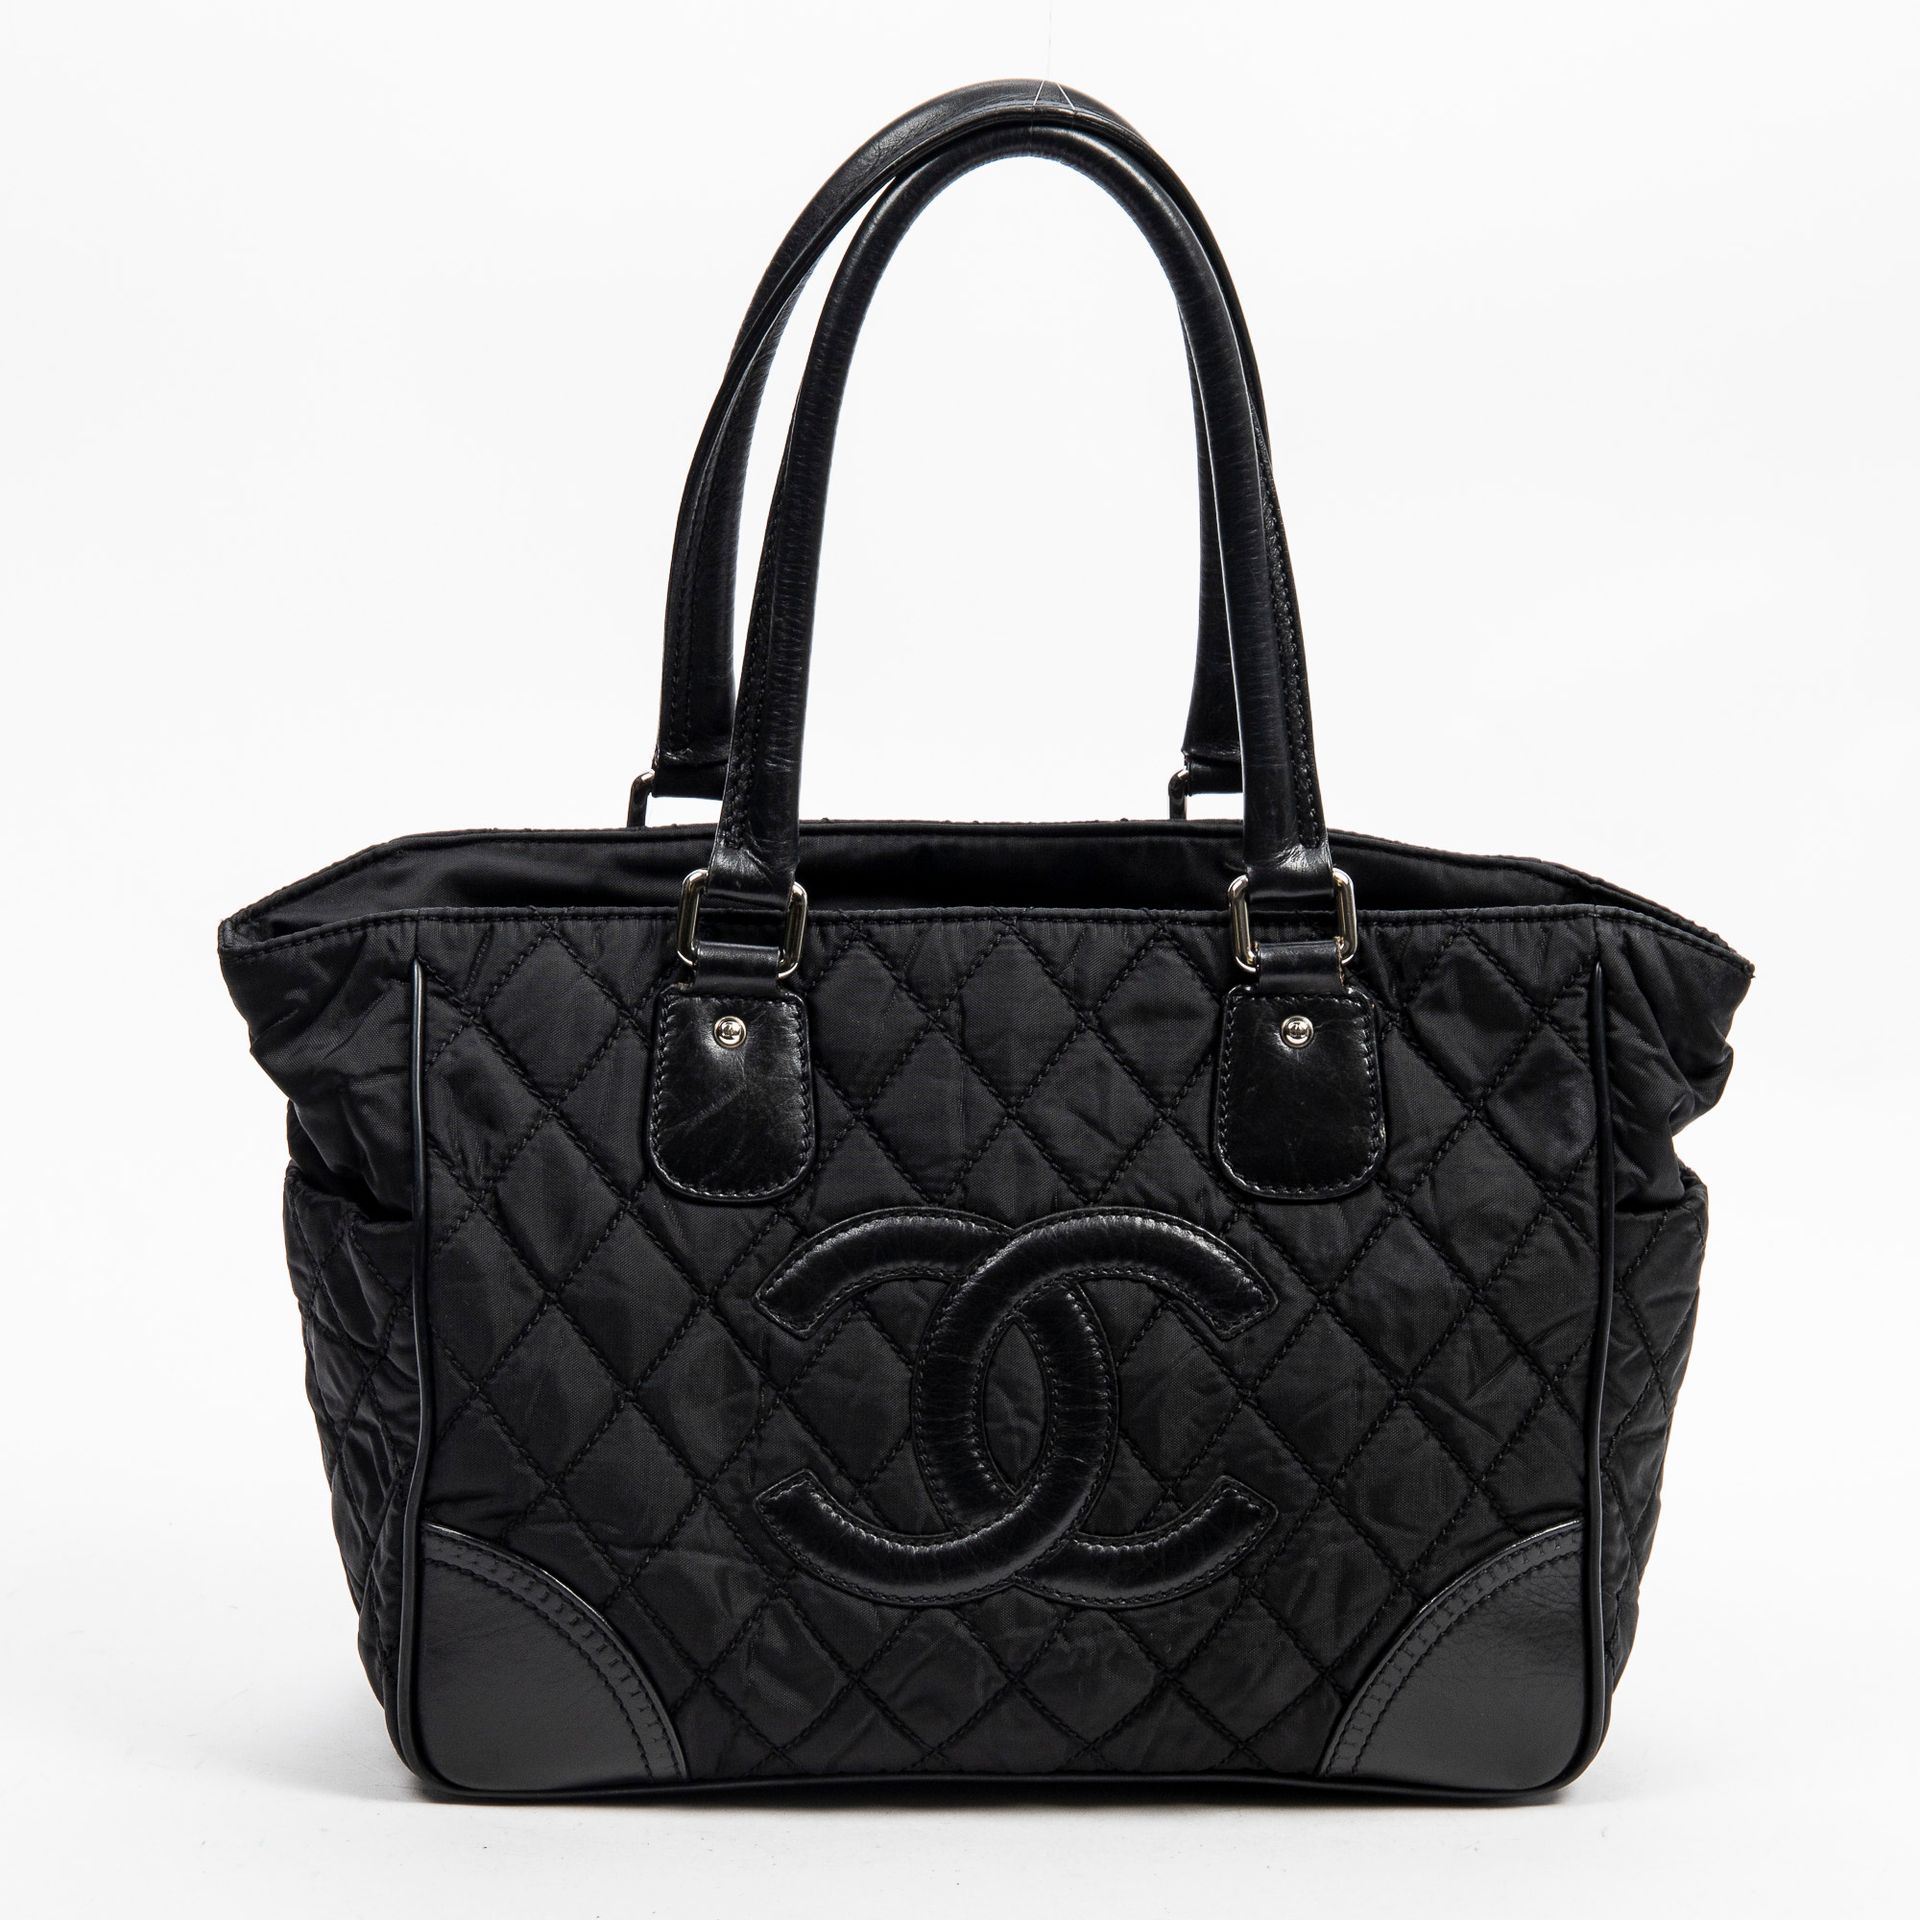 Chanel 香奈儿 - 拼接尼龙和黑色皮革购物袋 - 黑色棉布内衬 - 拉链封口 - 两个手柄 - 镀铬金属处理 - 有真品编号 - 尺寸：33,5x25x1&hellip;